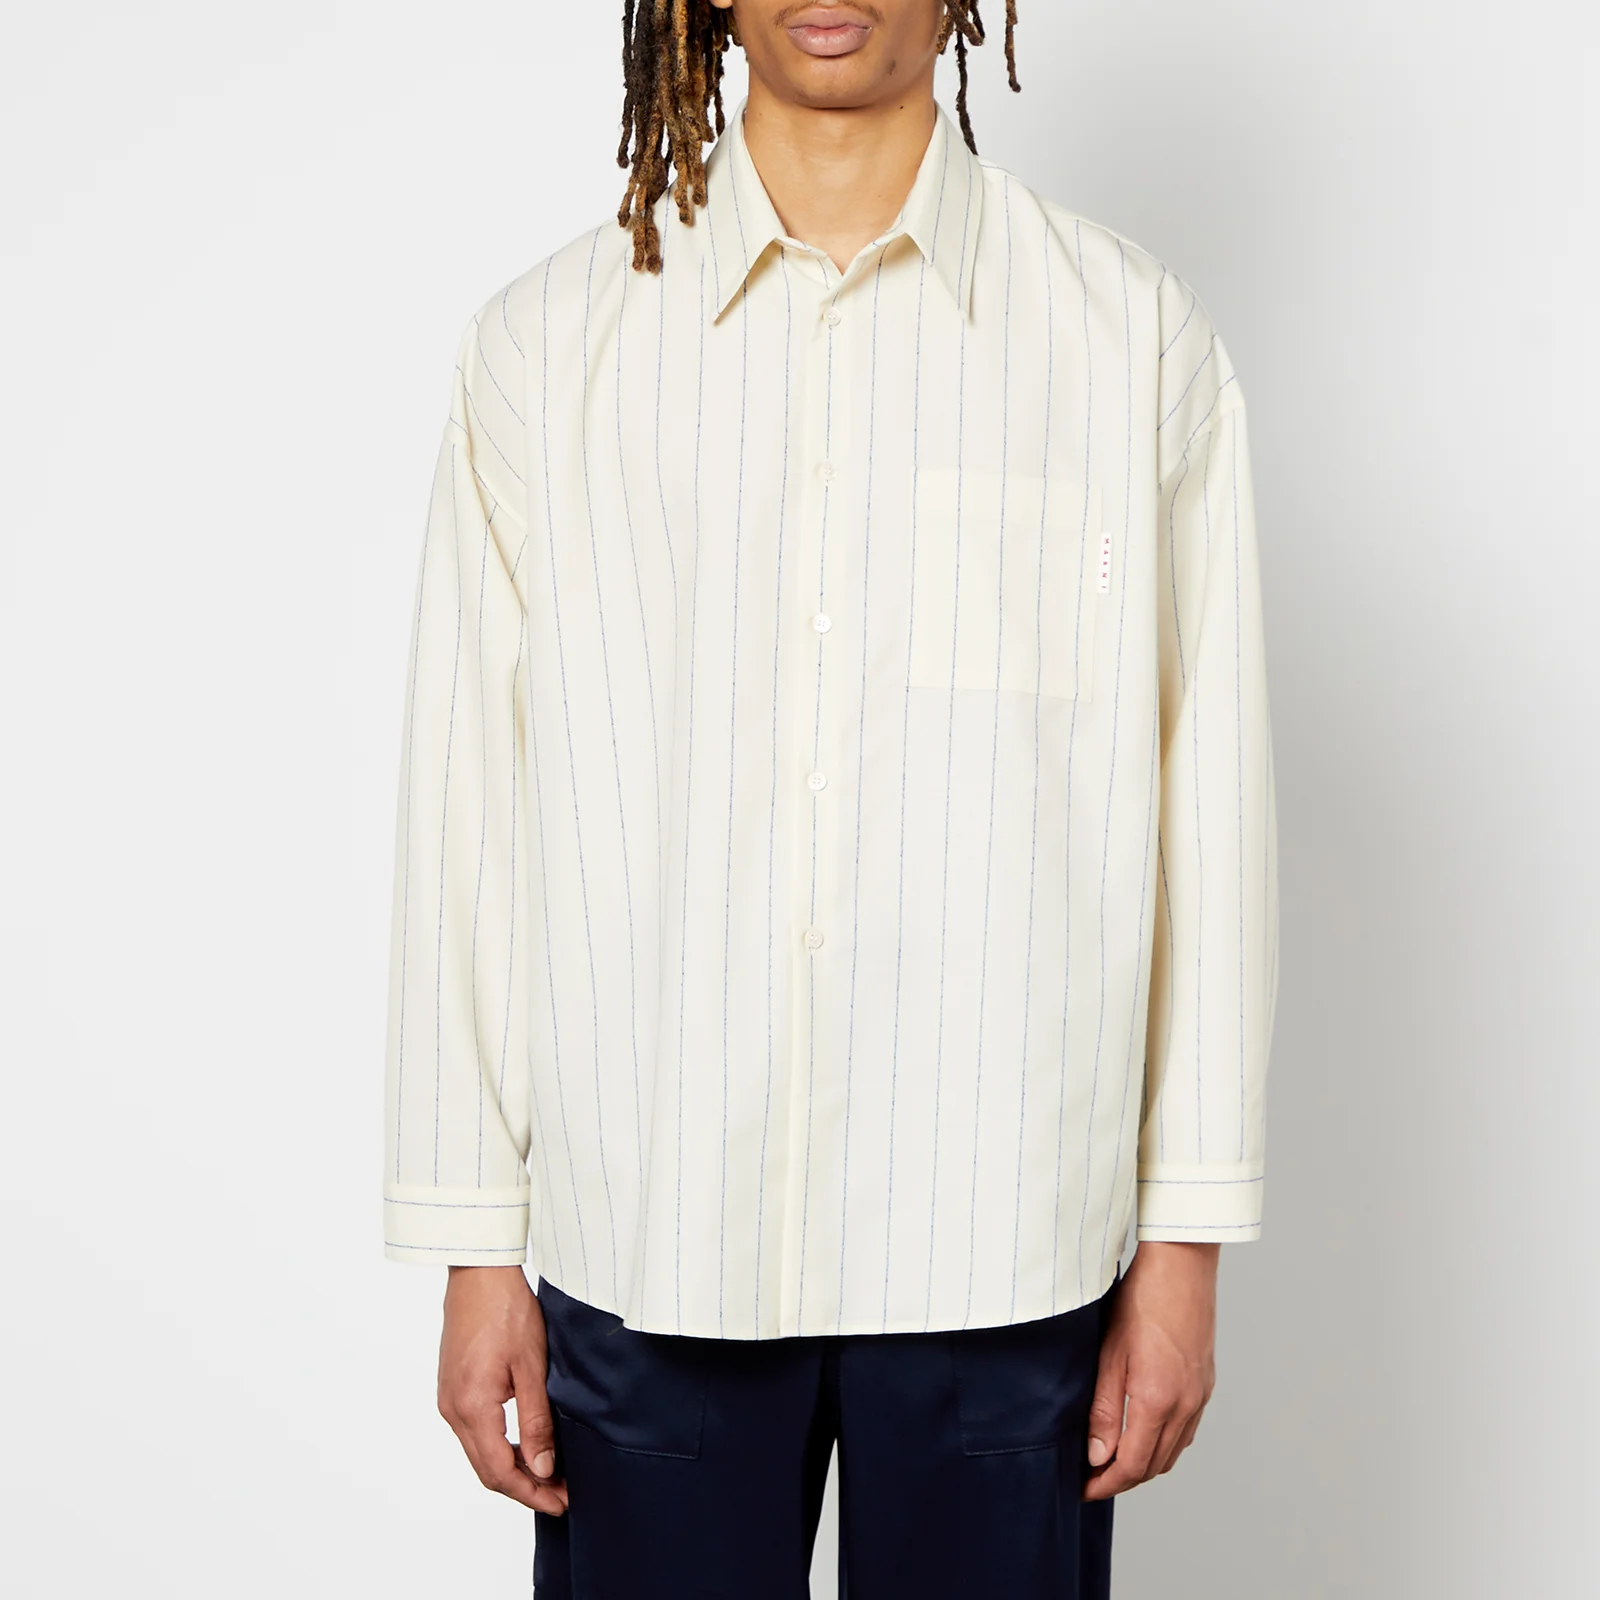 Marni Men's Pin Stripe Shirt - Ivory Image 1